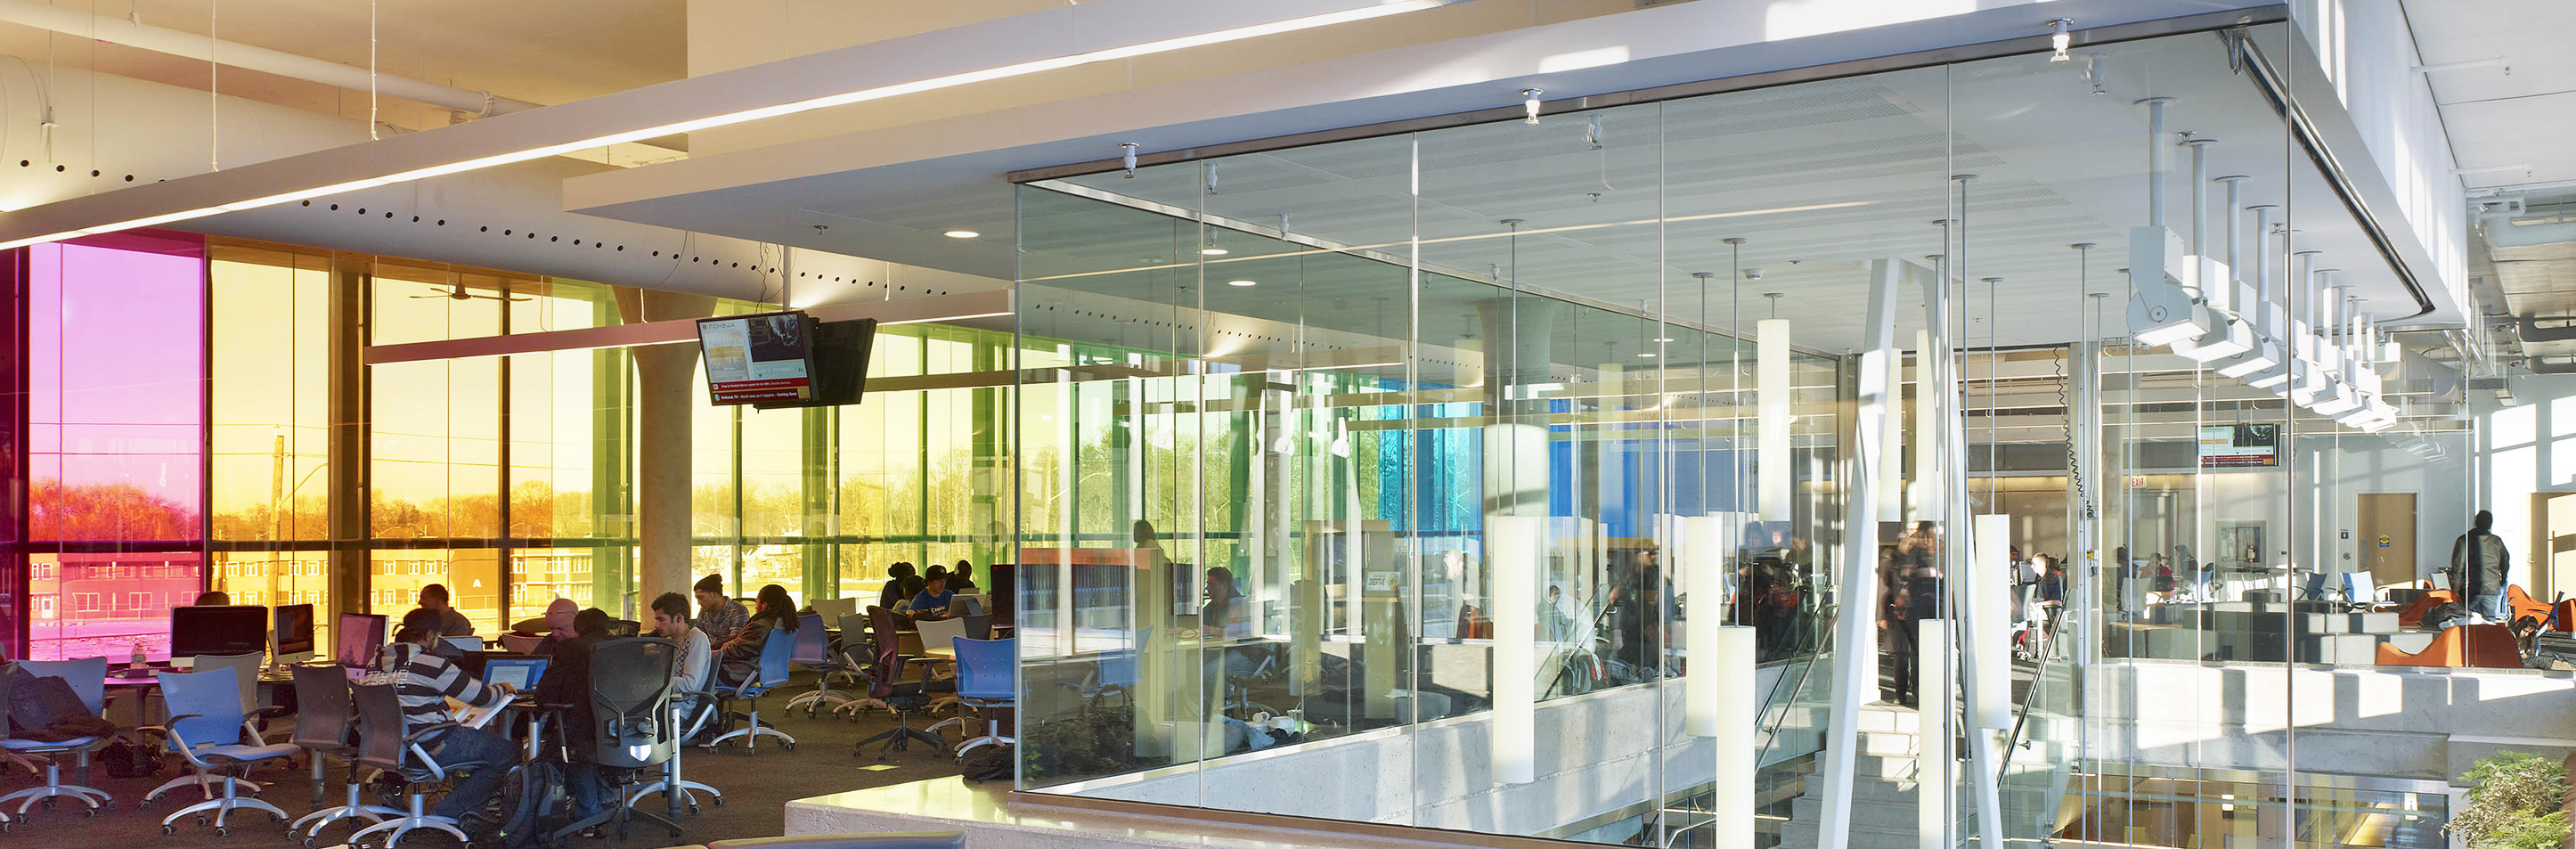 Sequence pendants enhance educational interior design in a large campus building atrium. 